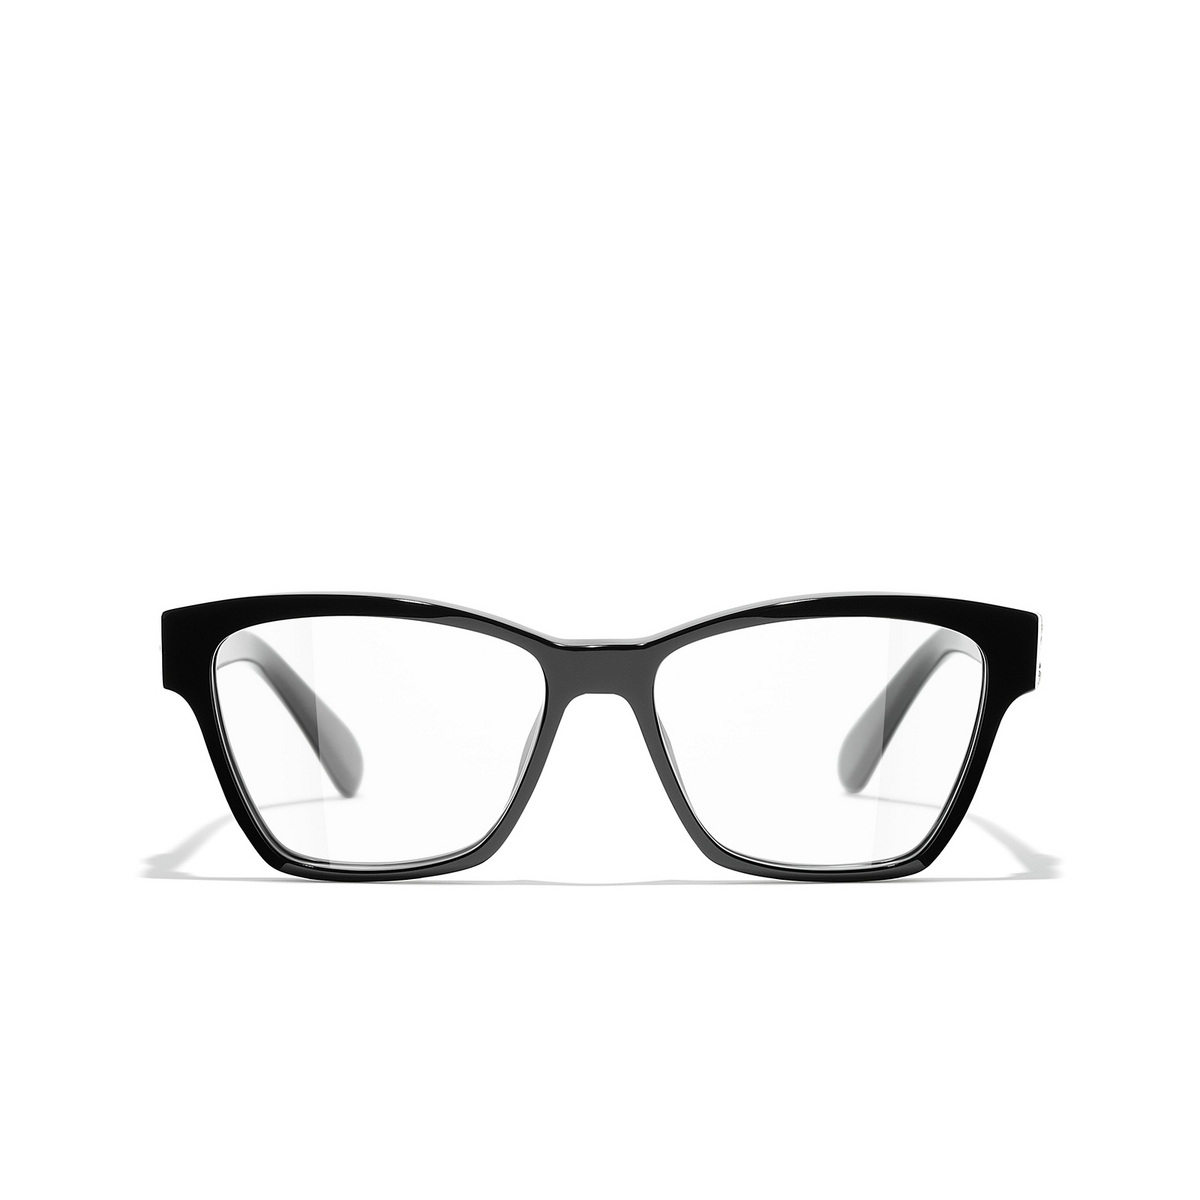 CHANEL cateye Eyeglasses C501 Black - front view